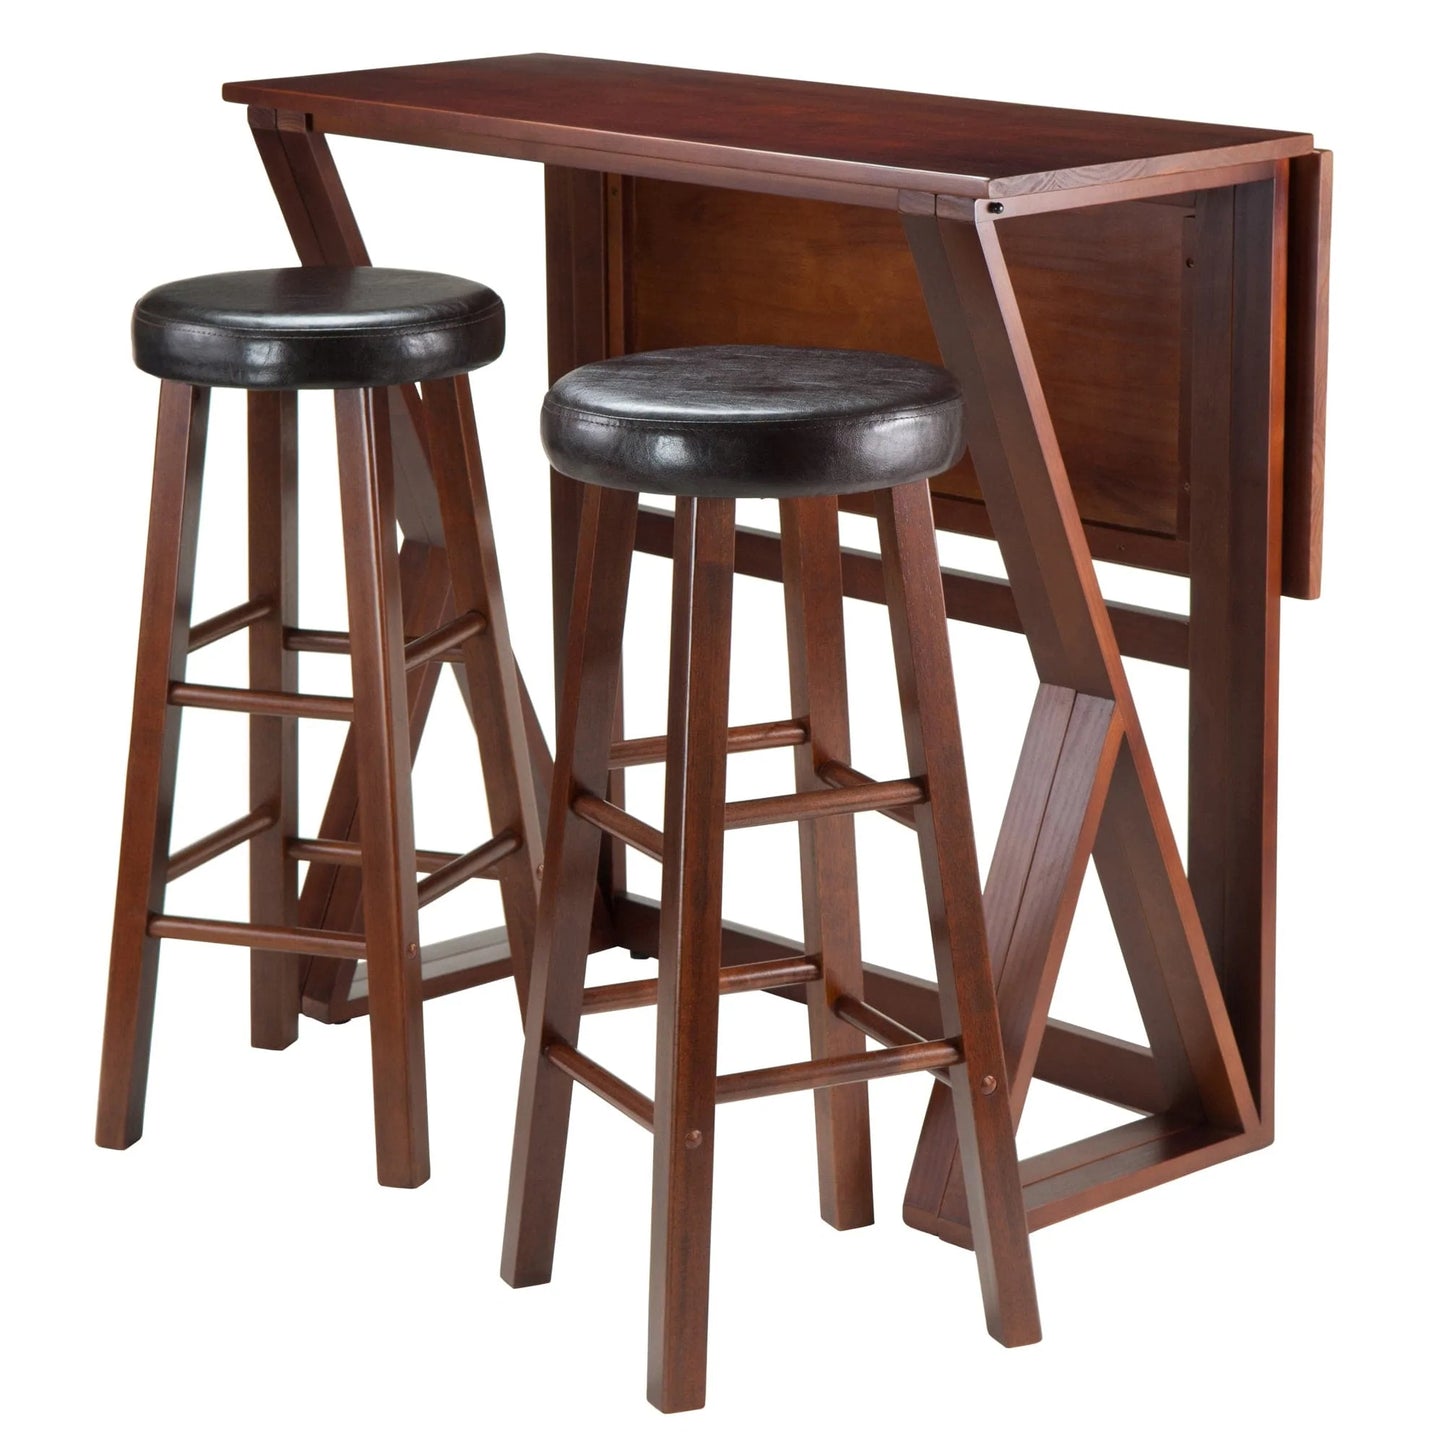 WINSOME Pub Table Set Harrington 3-Pc Drop Leaf Table with Cushion Seat Bar Stools, Walnut and Espresso